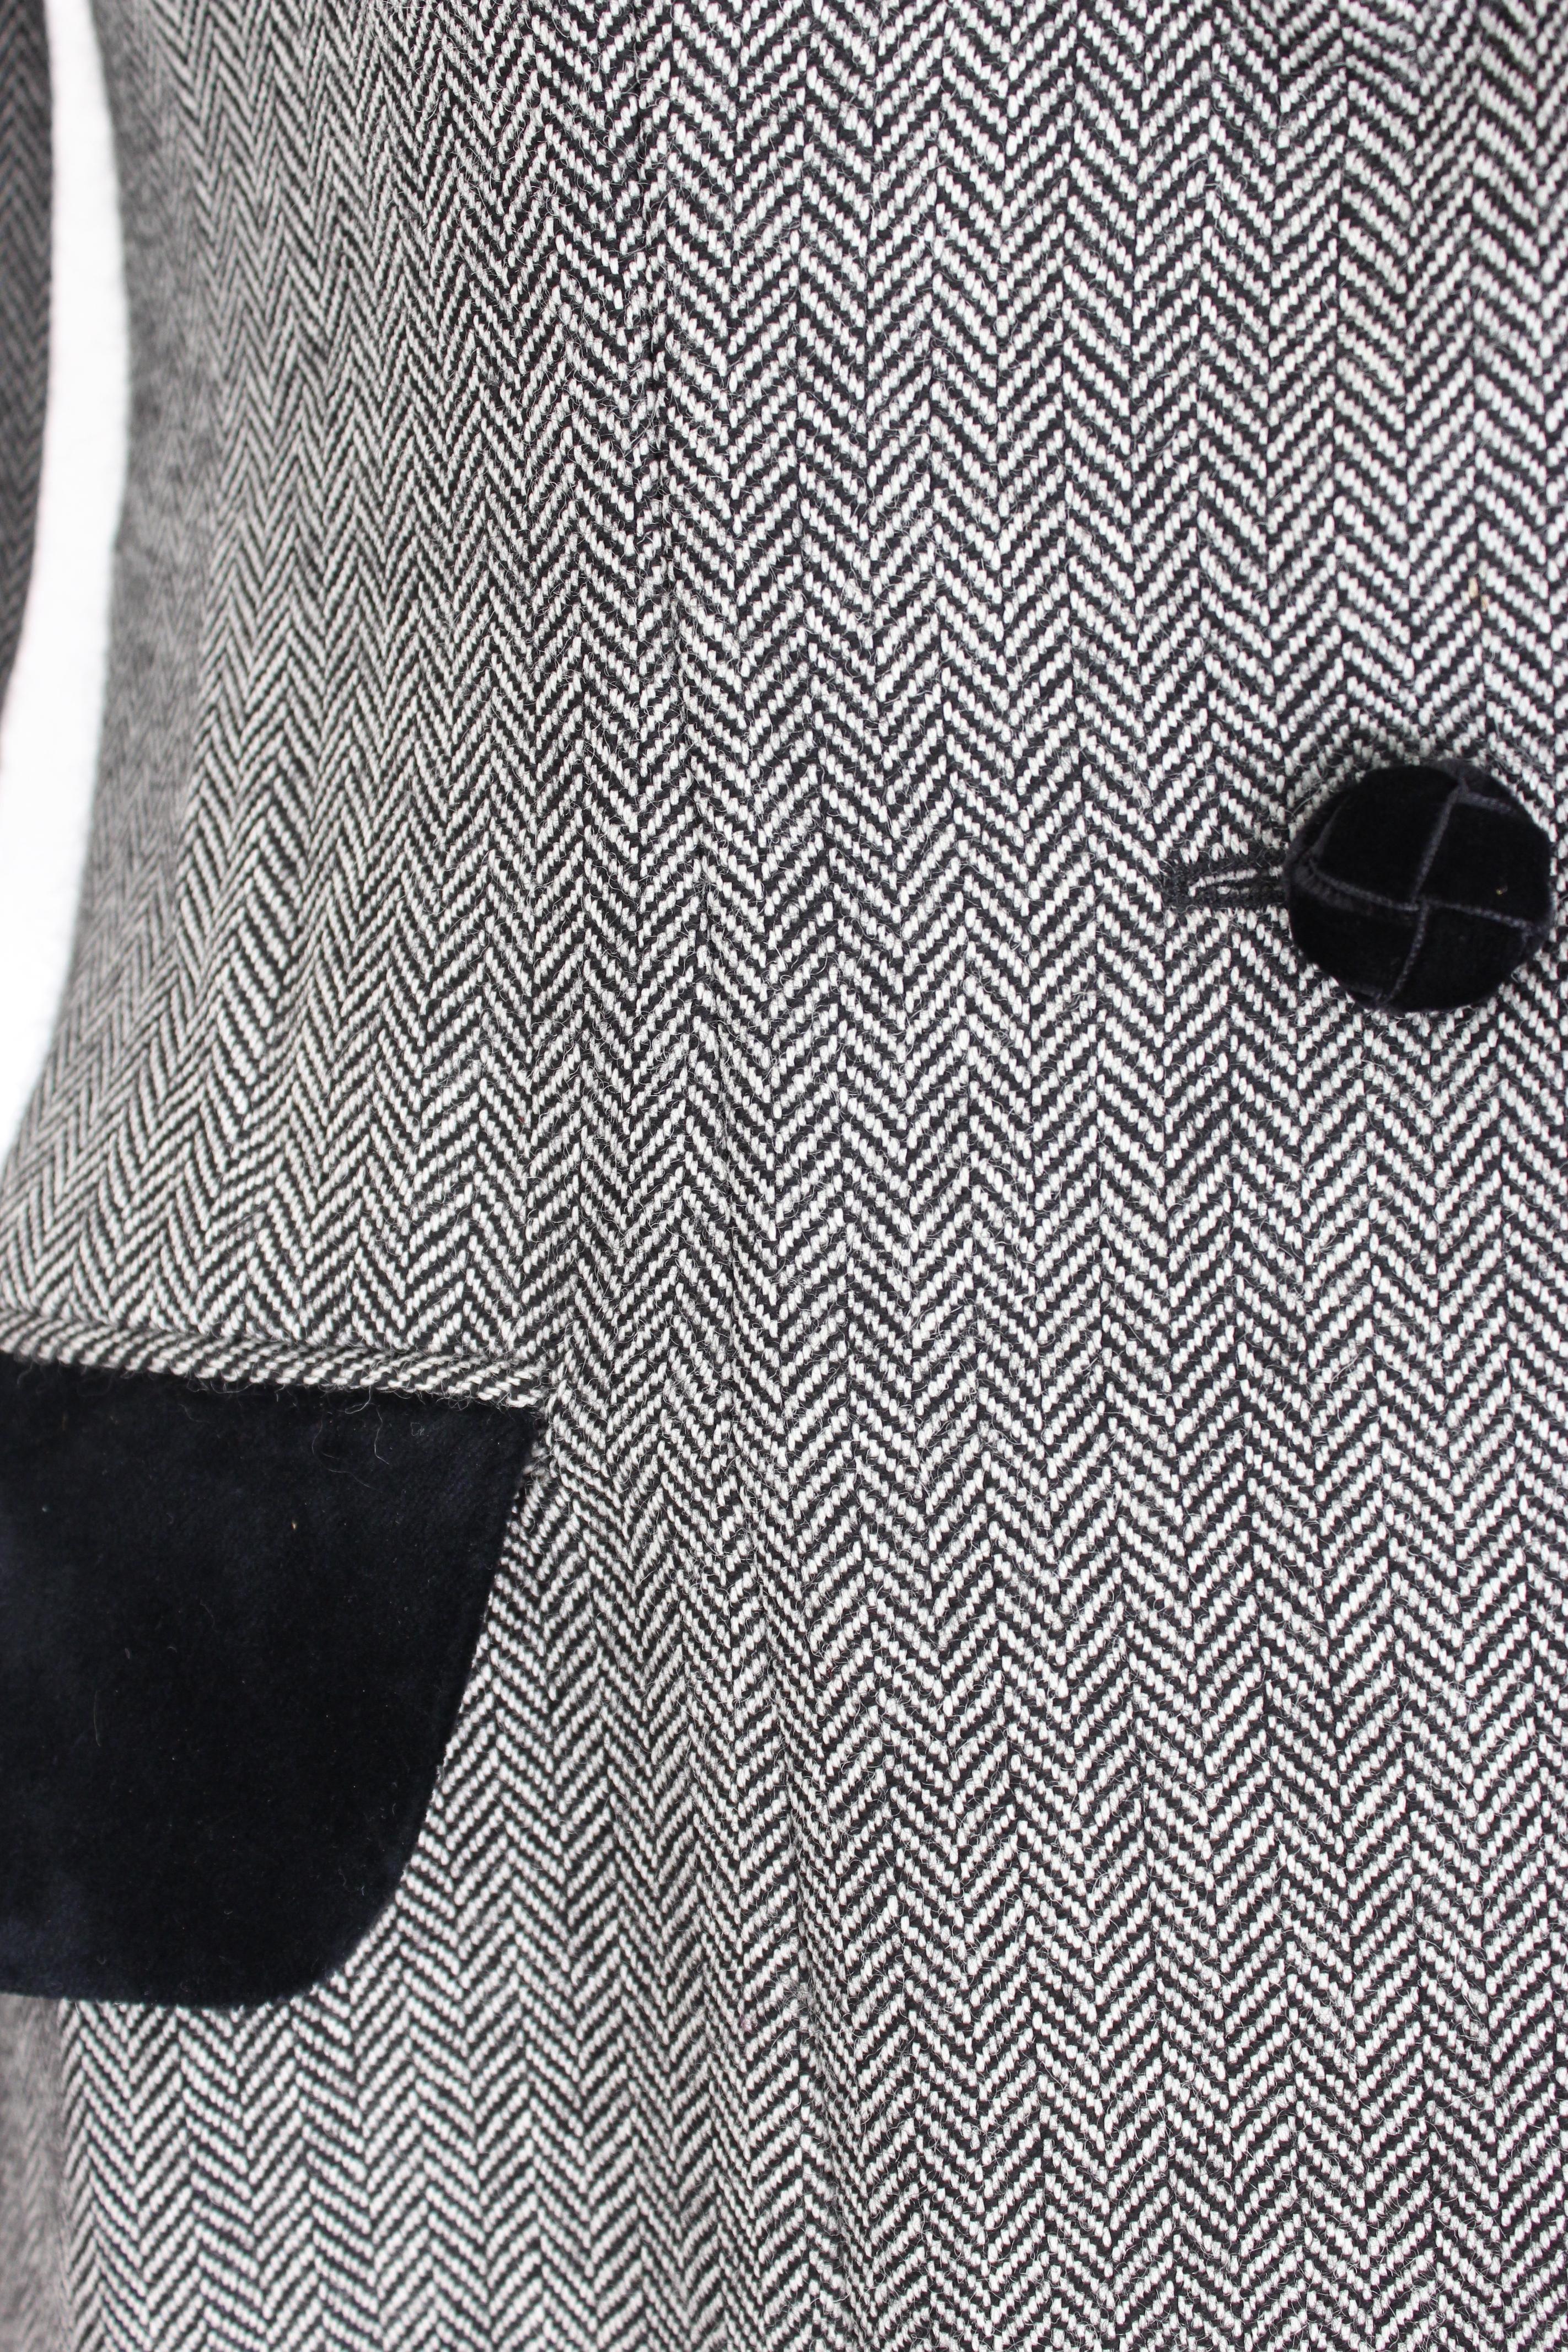 Moschino Black White Wool Tweed Jacket 2